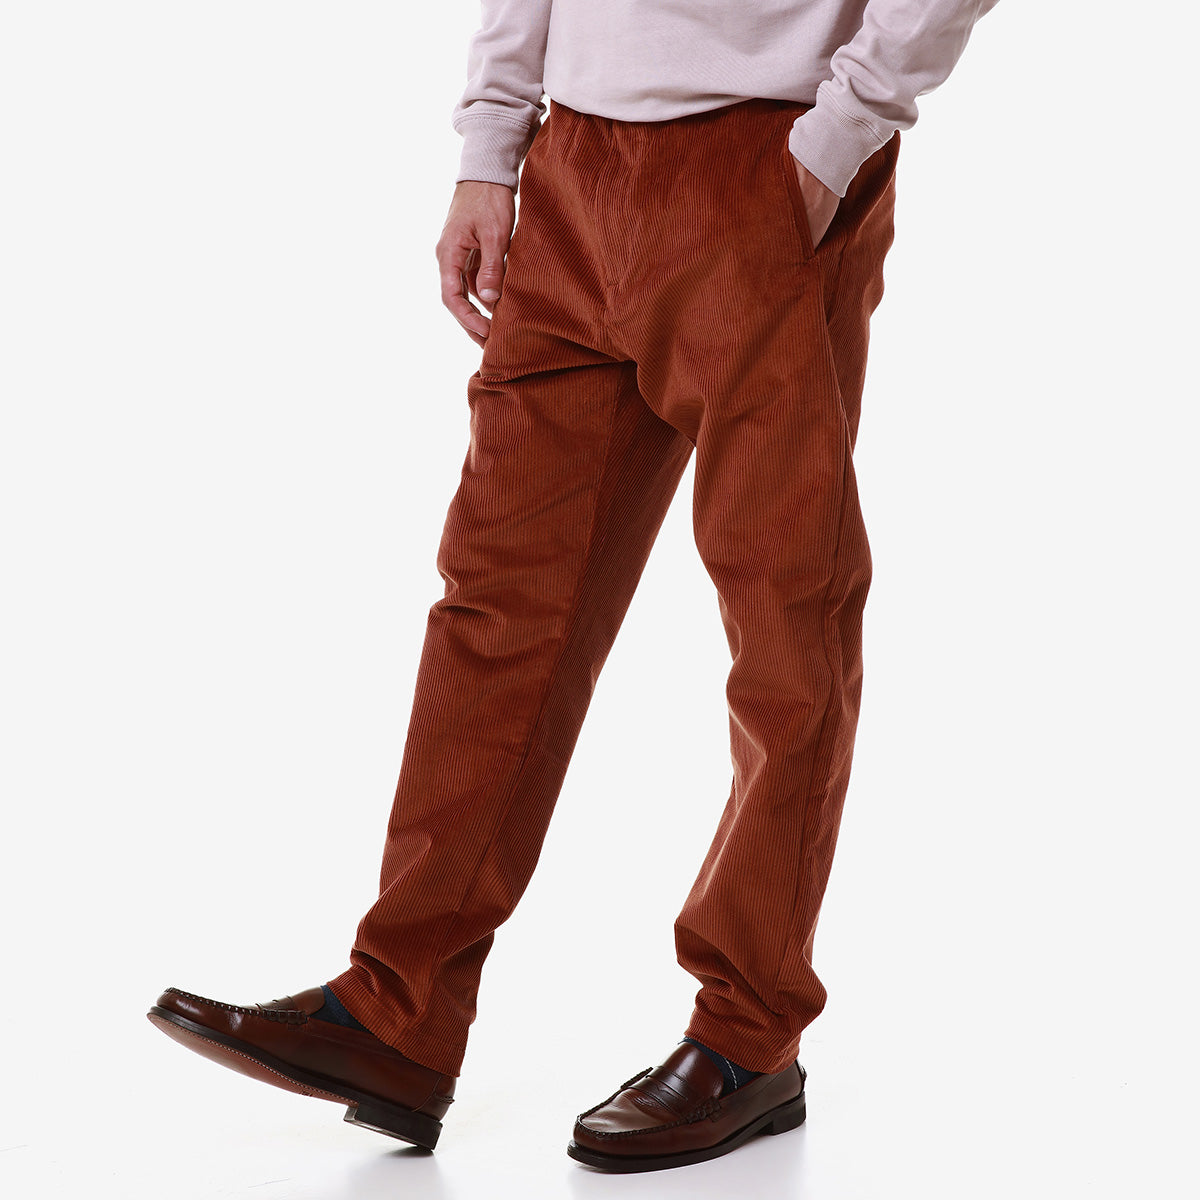 ROBE GIOVANI HAPLO - Pants - 4 Pocket - Man - BROWN CAMEL